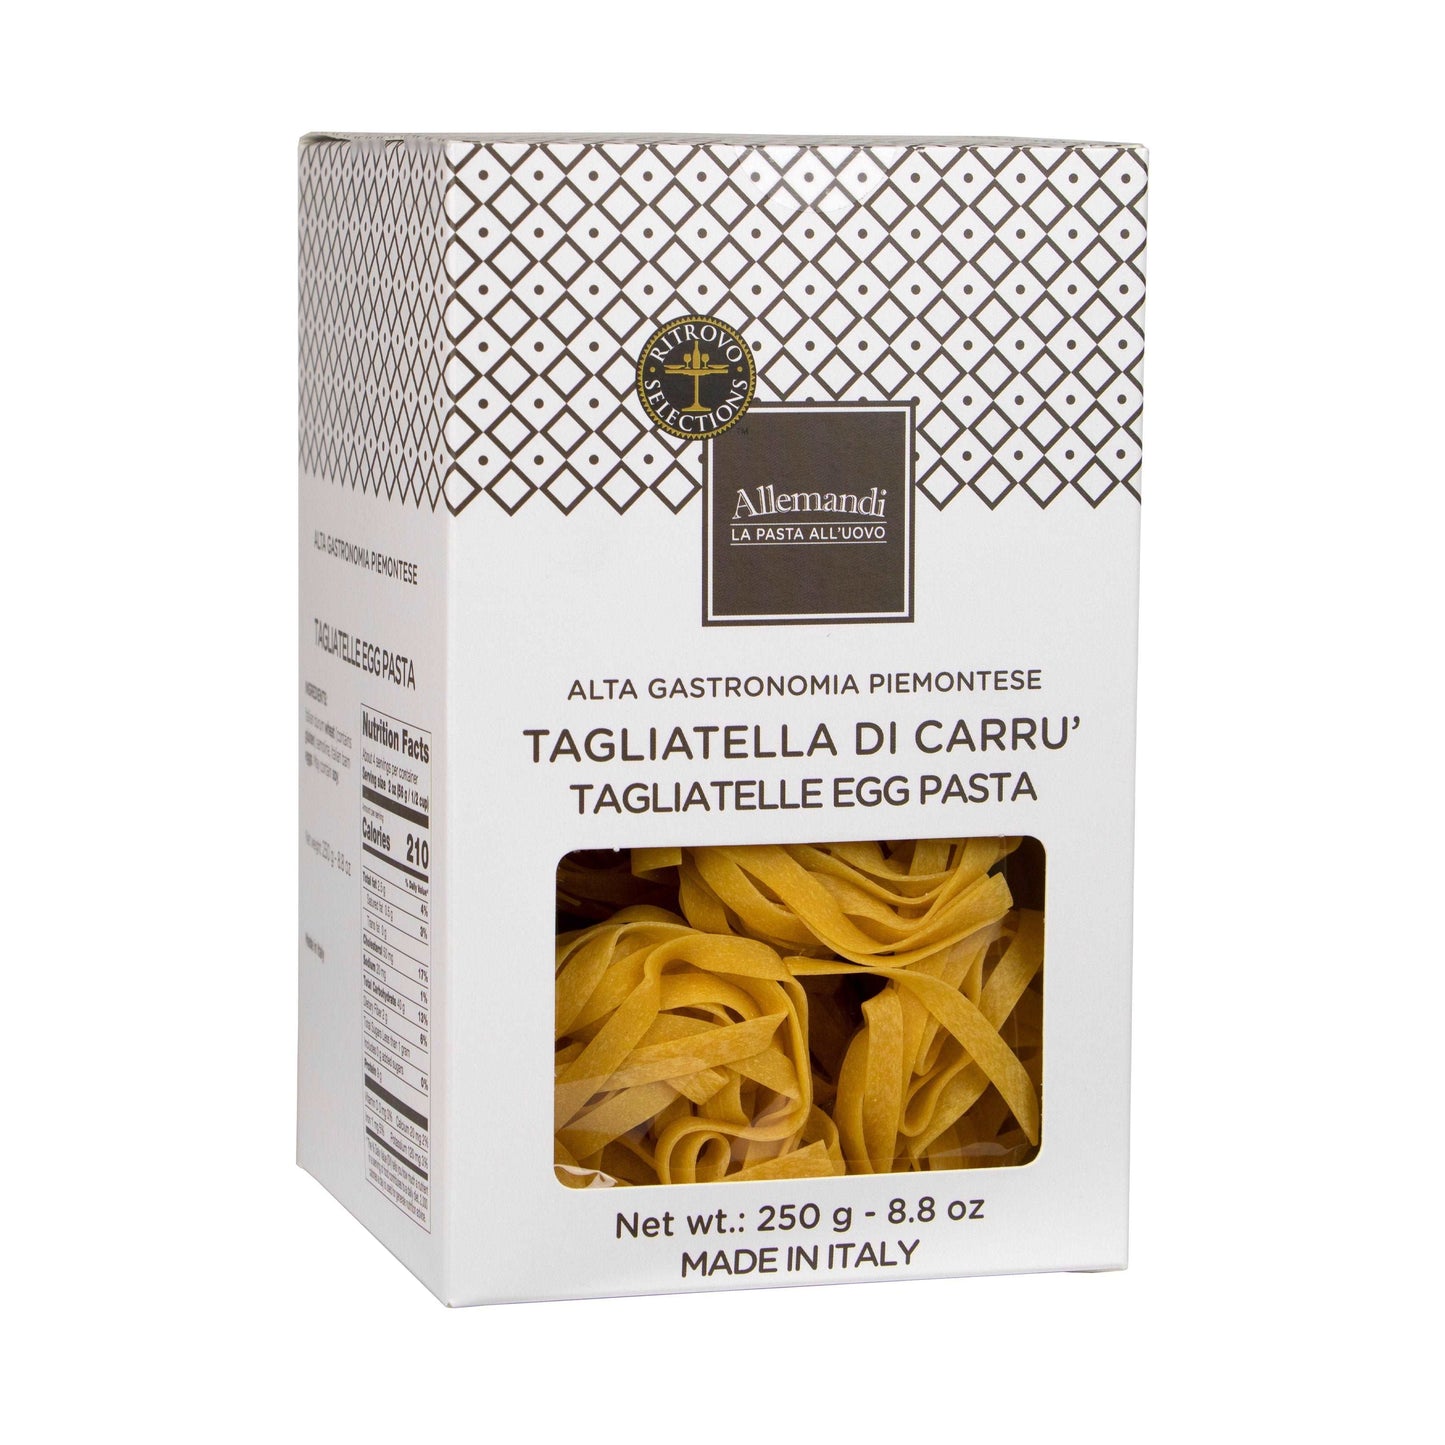 Allemandi Tagliatelle Nests, egg pasta with cage free eggs